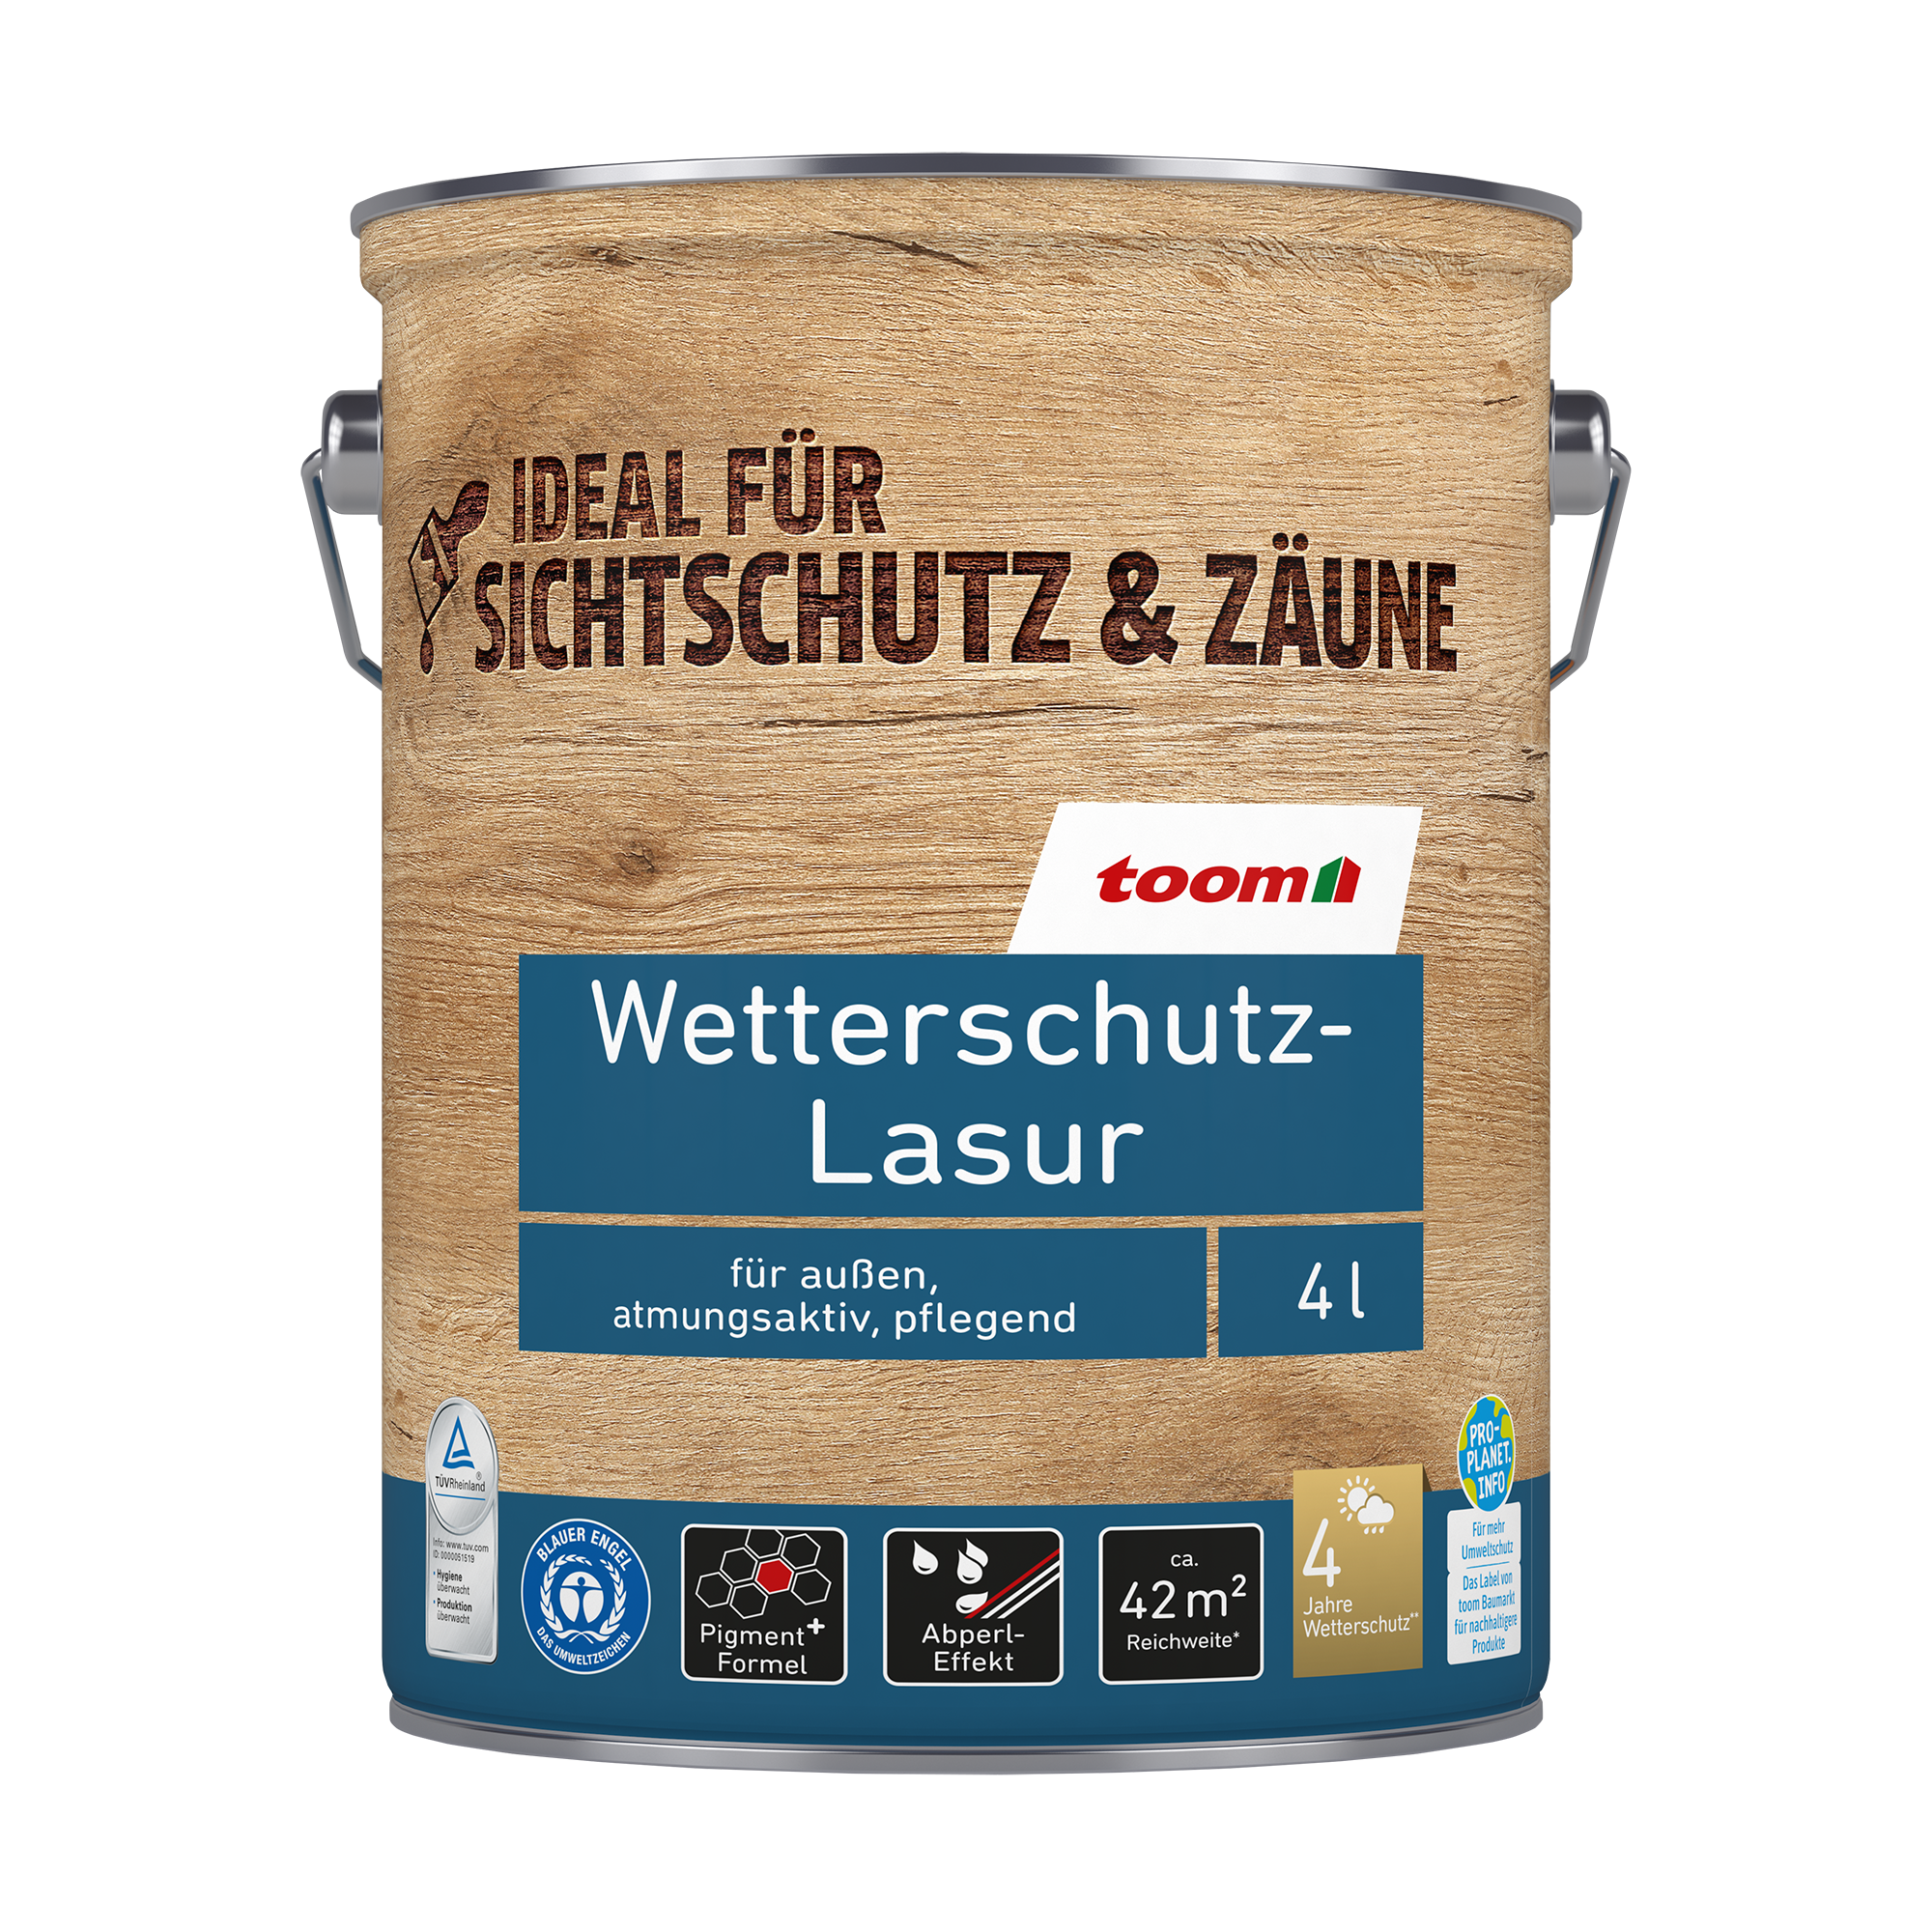 Wetterschutz-Lasur kastanienfarben 4 l + product picture